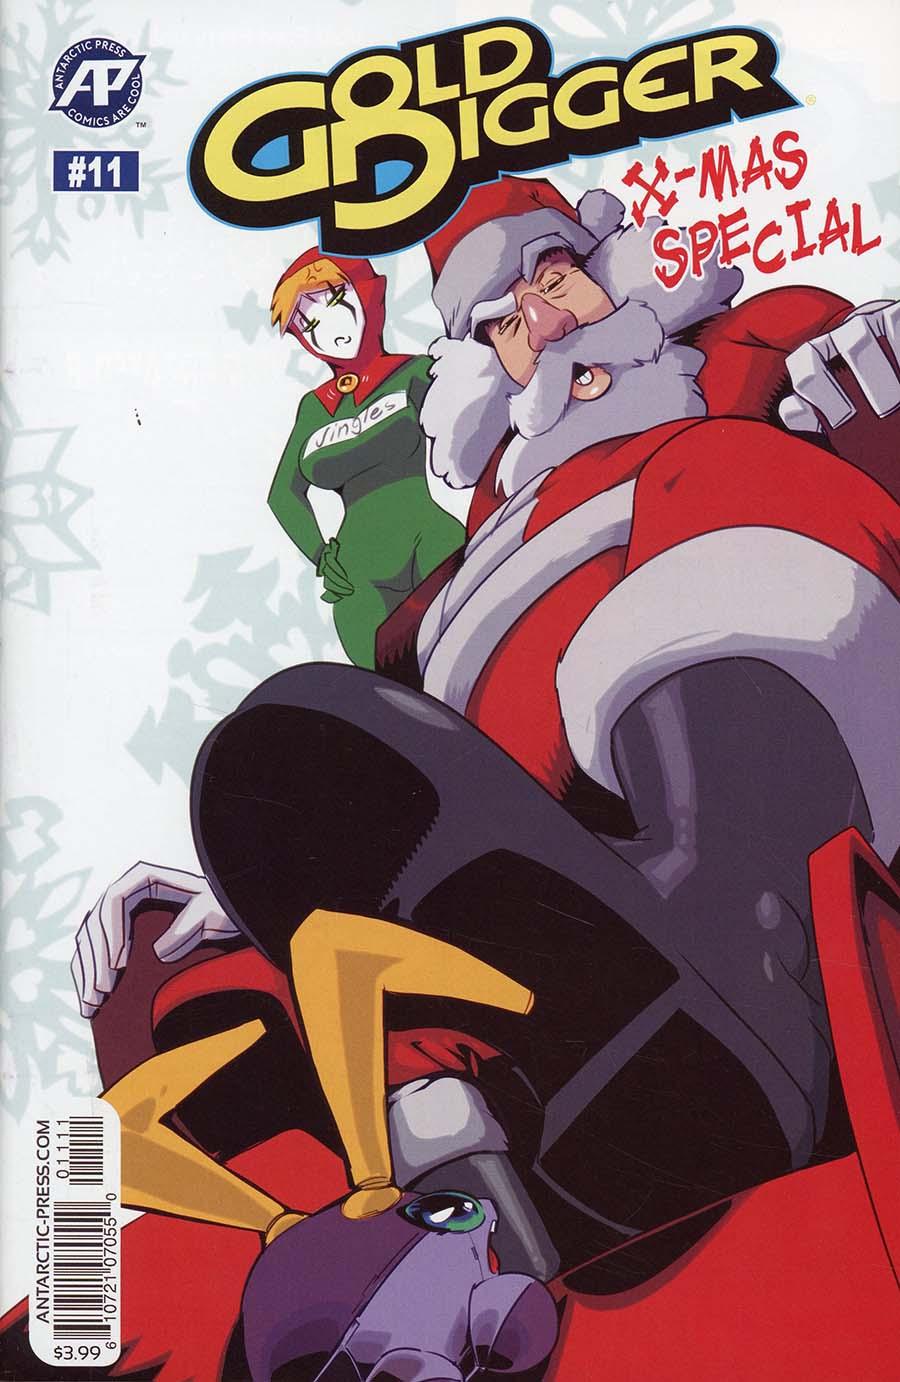 Gold Digger Christmas Special Vol. 1 #11